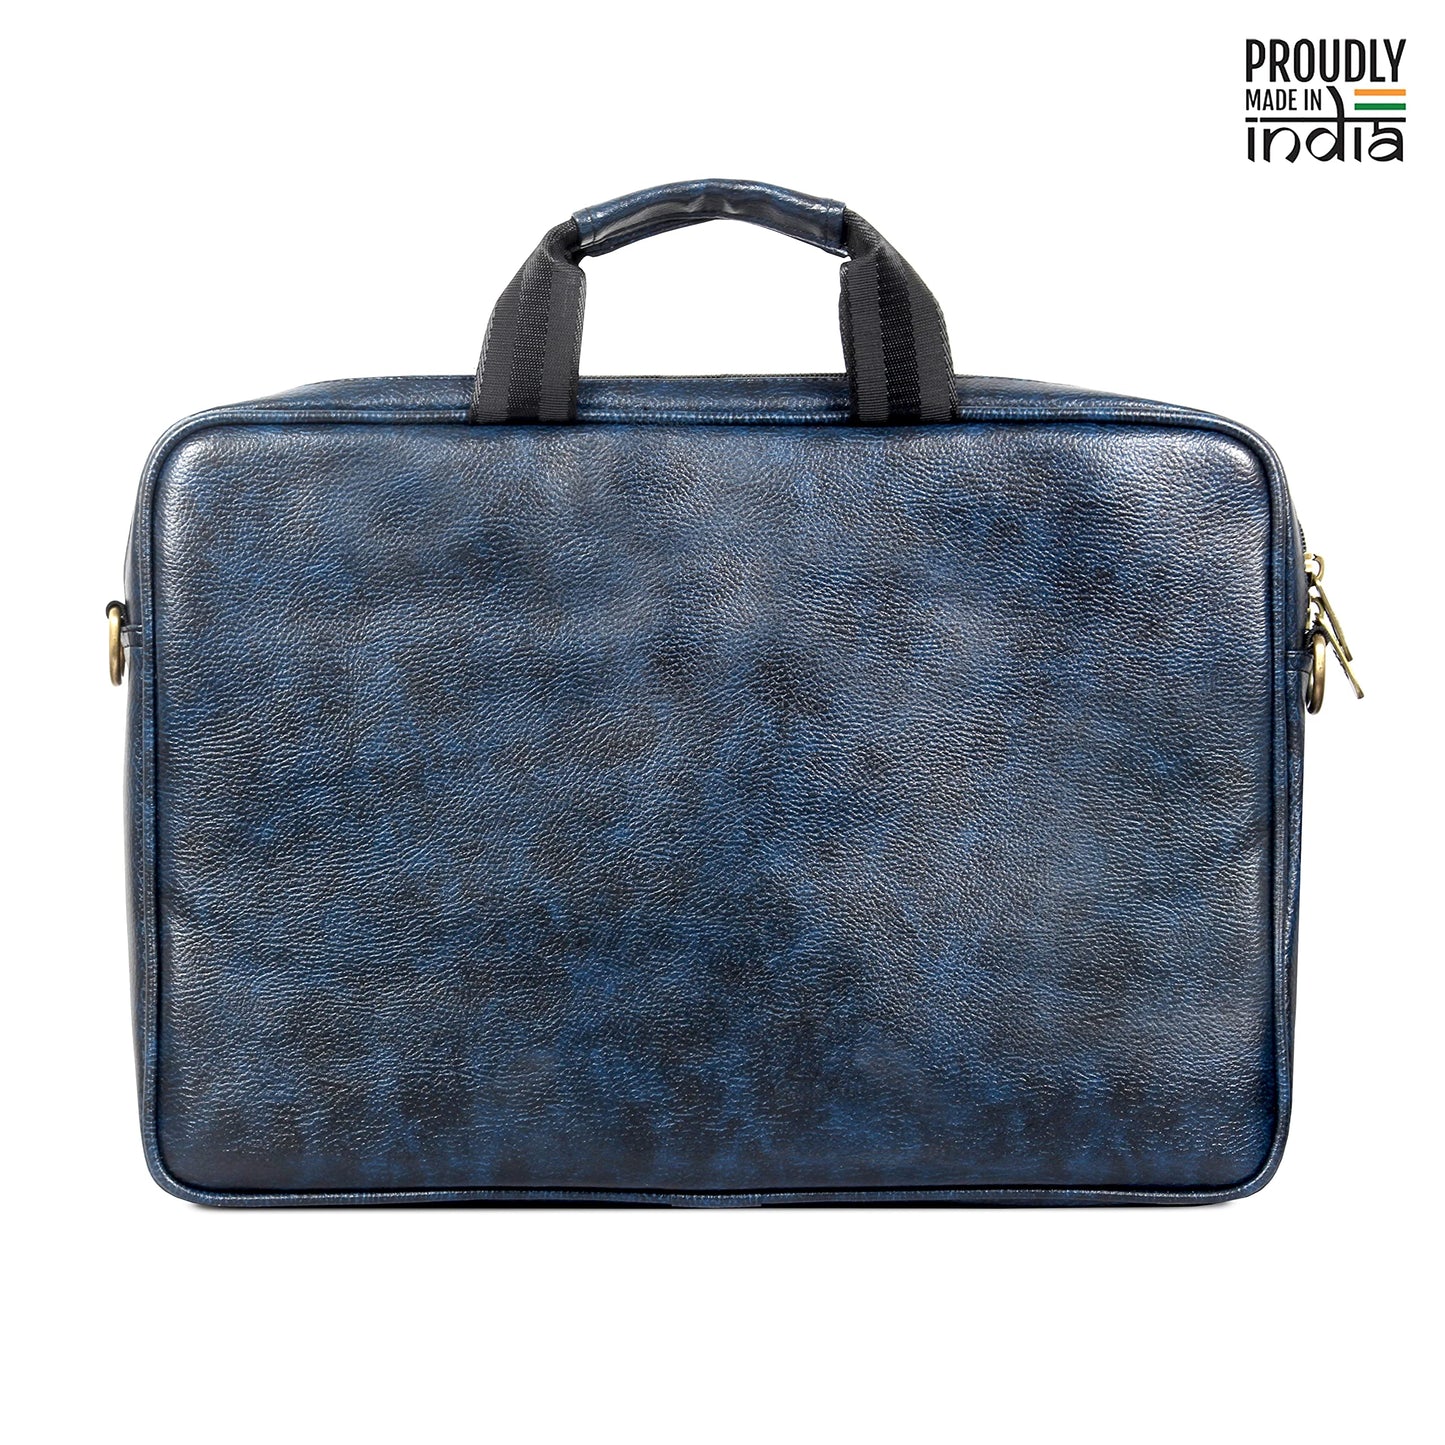 THE CLOWNFISH Unisex-Adult Divine Faux Leather 15.6 Inch Laptop Messenger Bag Briefcase (Blue)